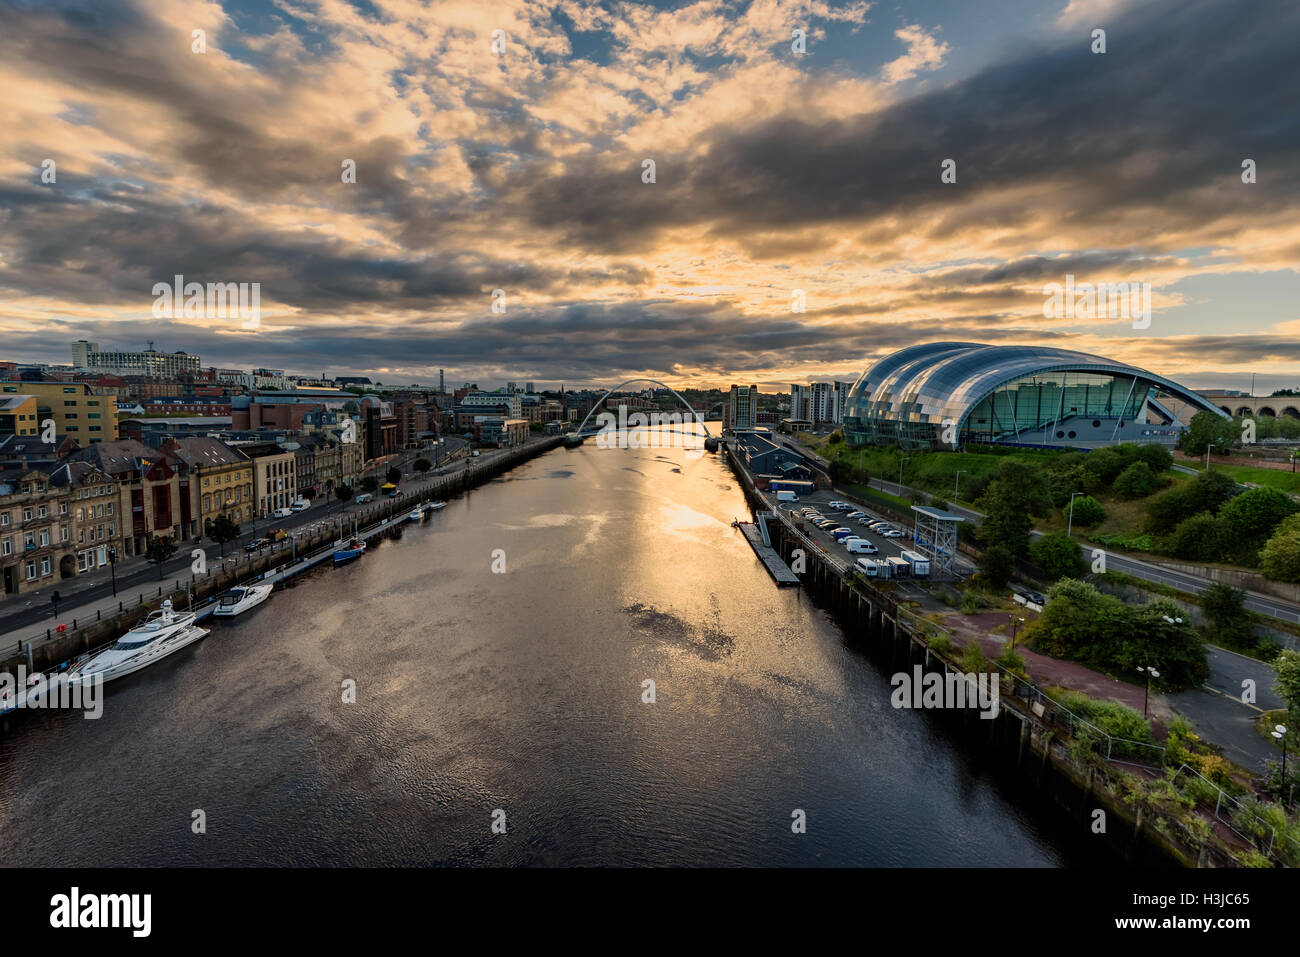 Newcastle Upon Tyne ist eine Universitätsstadt am Fluss Tyne im Nordosten Englands. Stockfoto